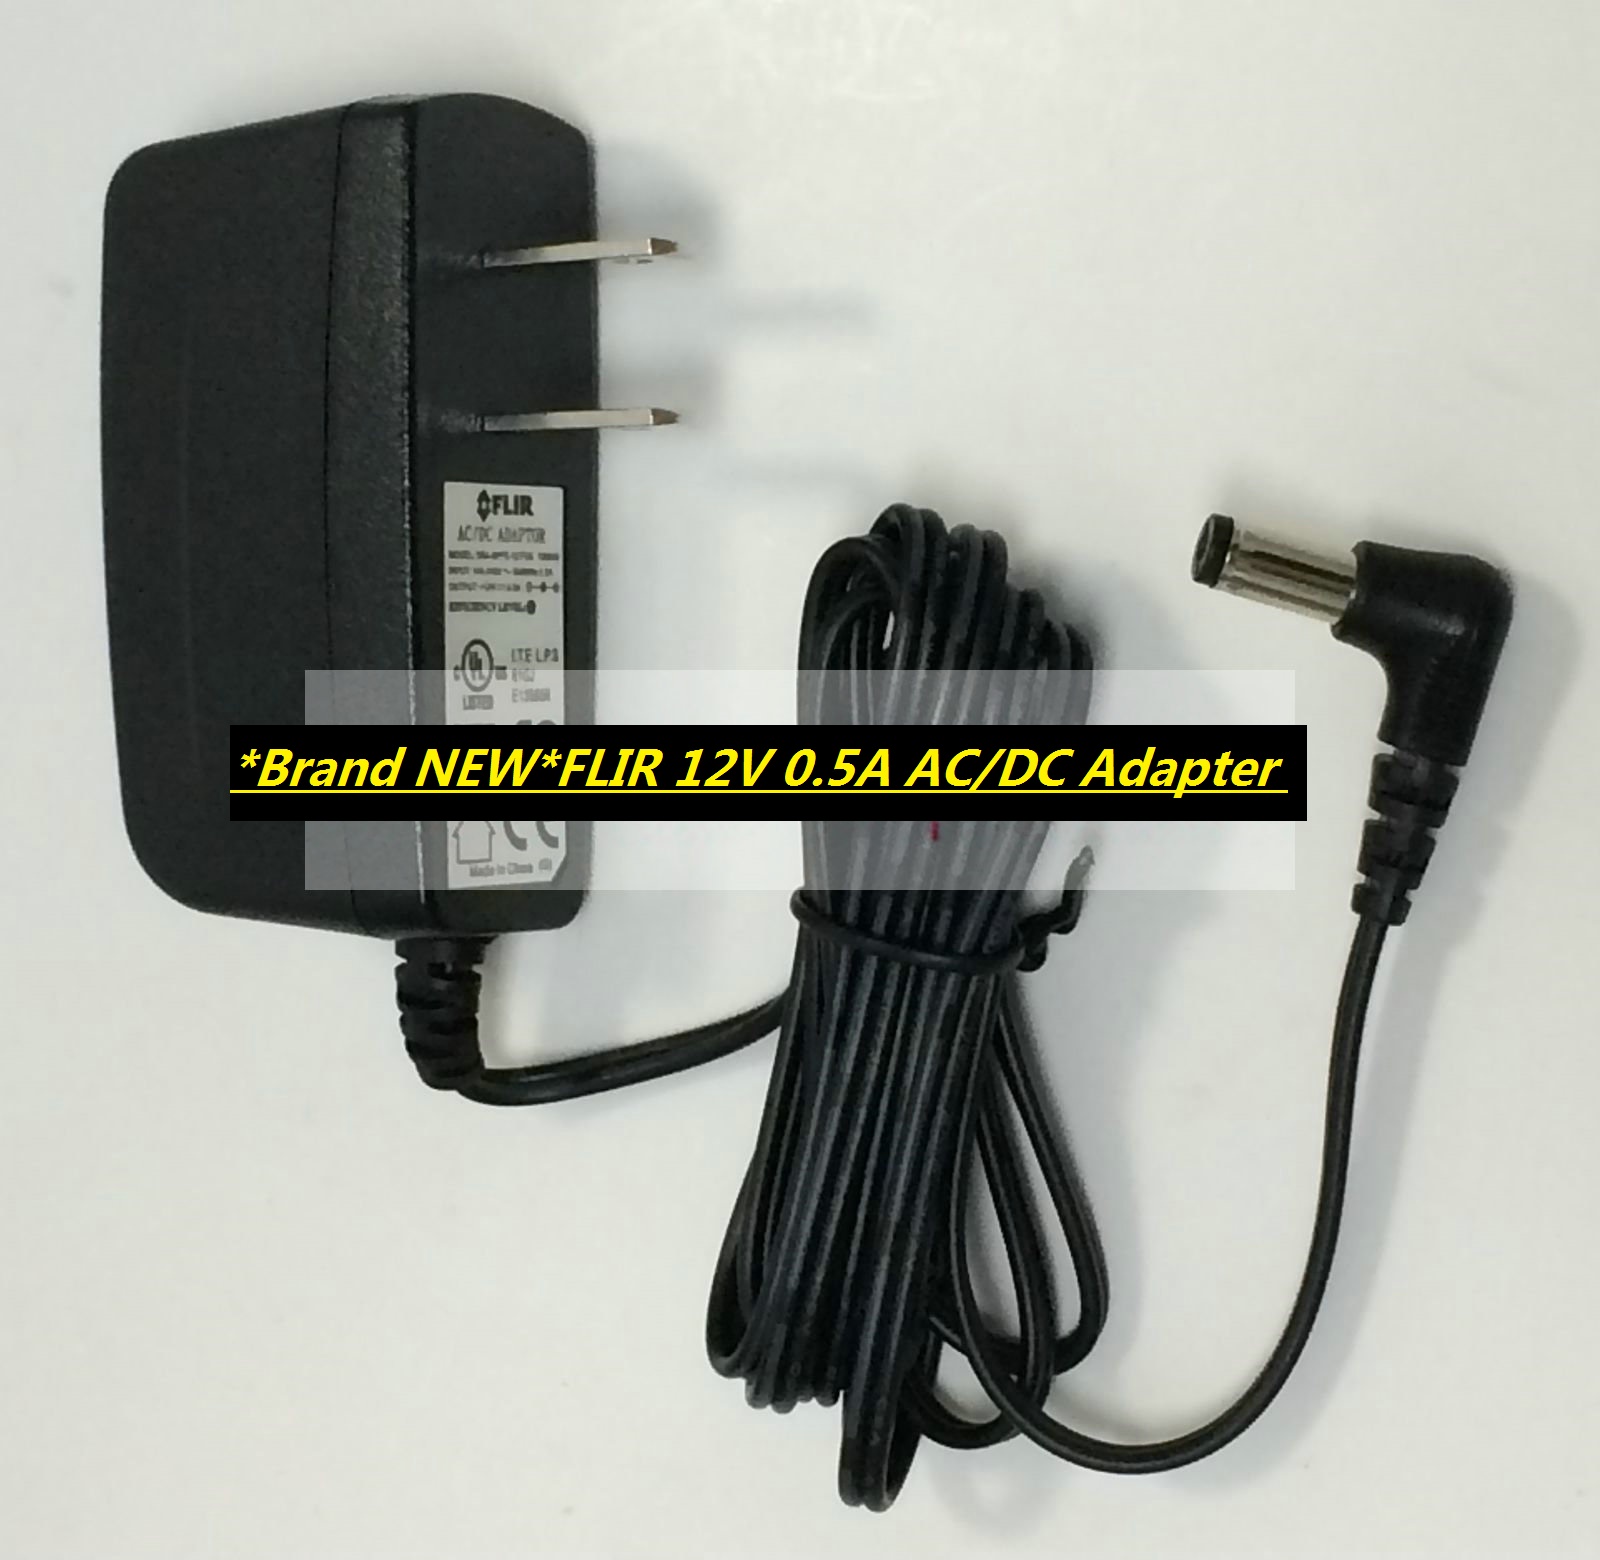 *Brand NEW*FLIR DSA-6PFE-12 FUS 120050 power charger 12V 0.5A AC/DC Adapter